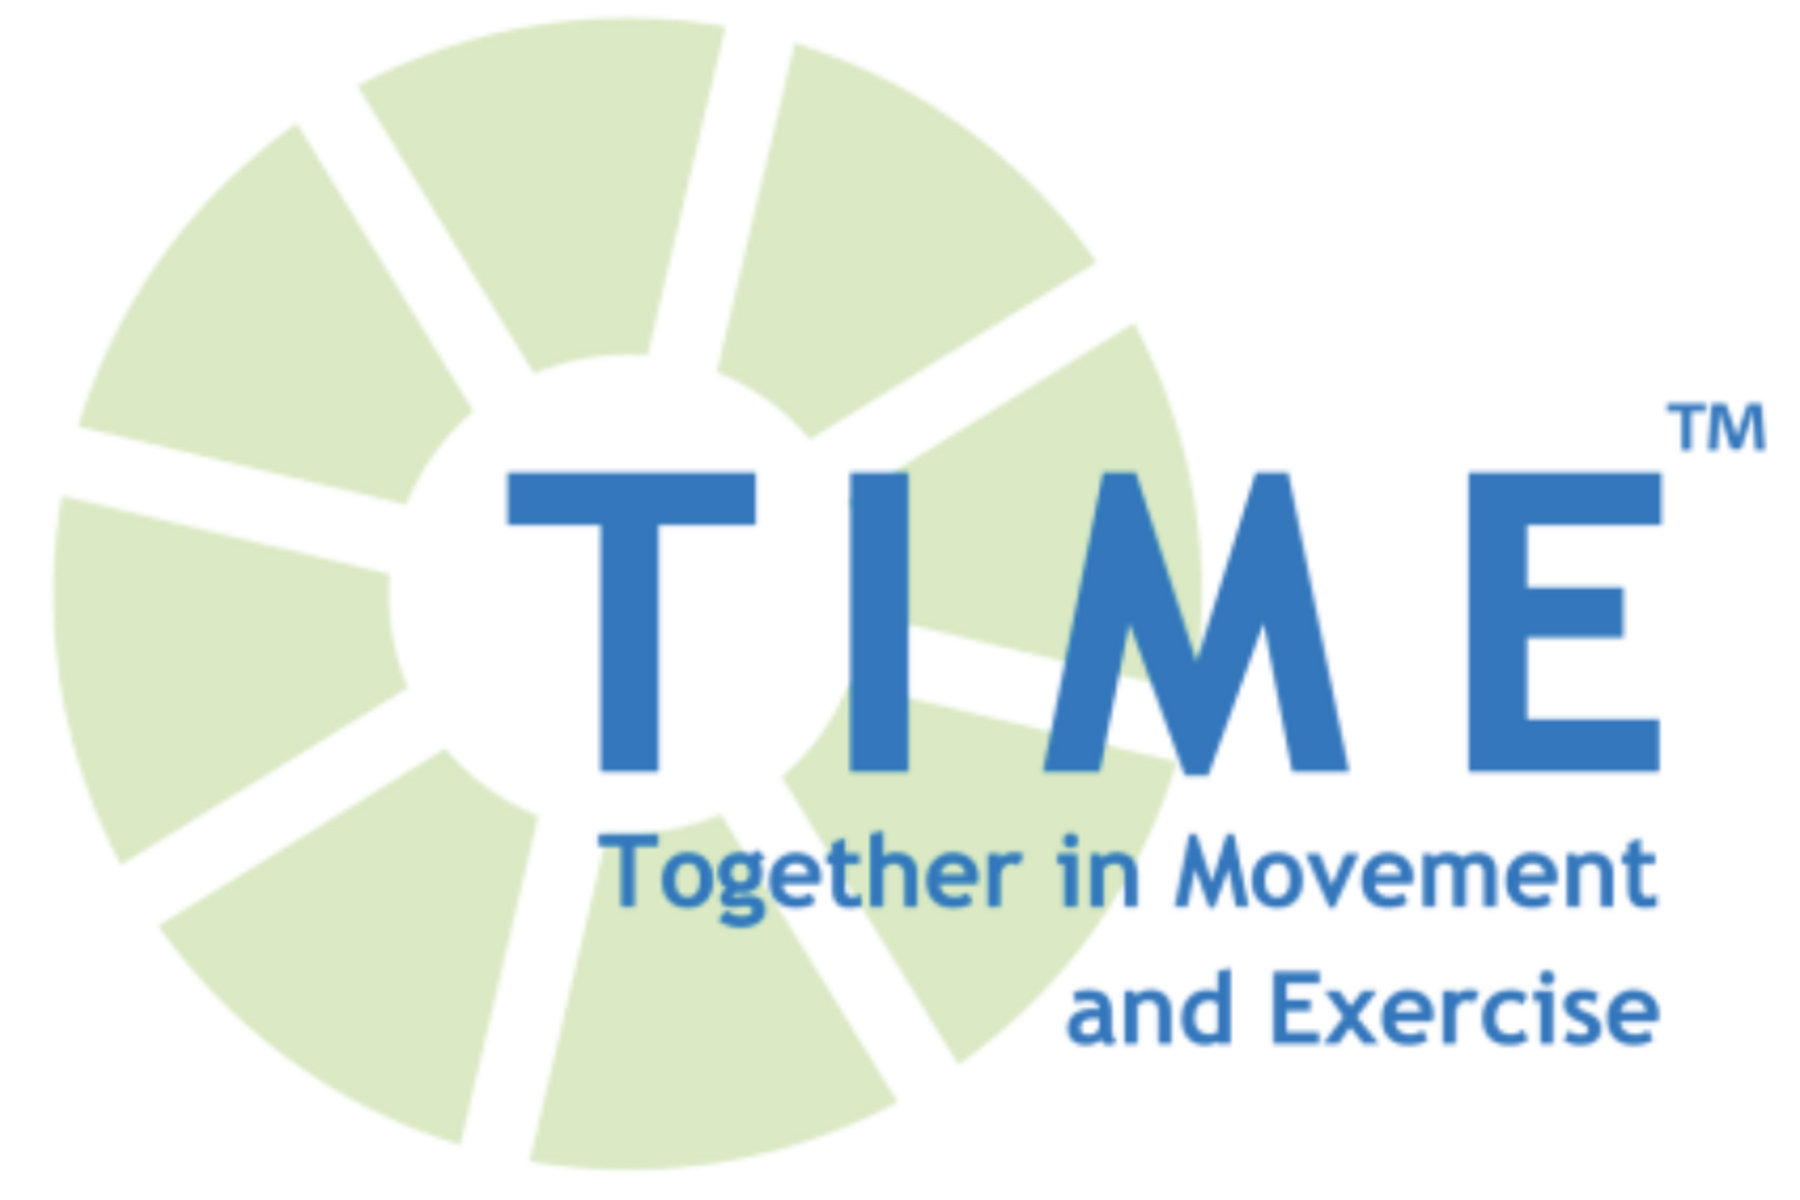 TIME logo